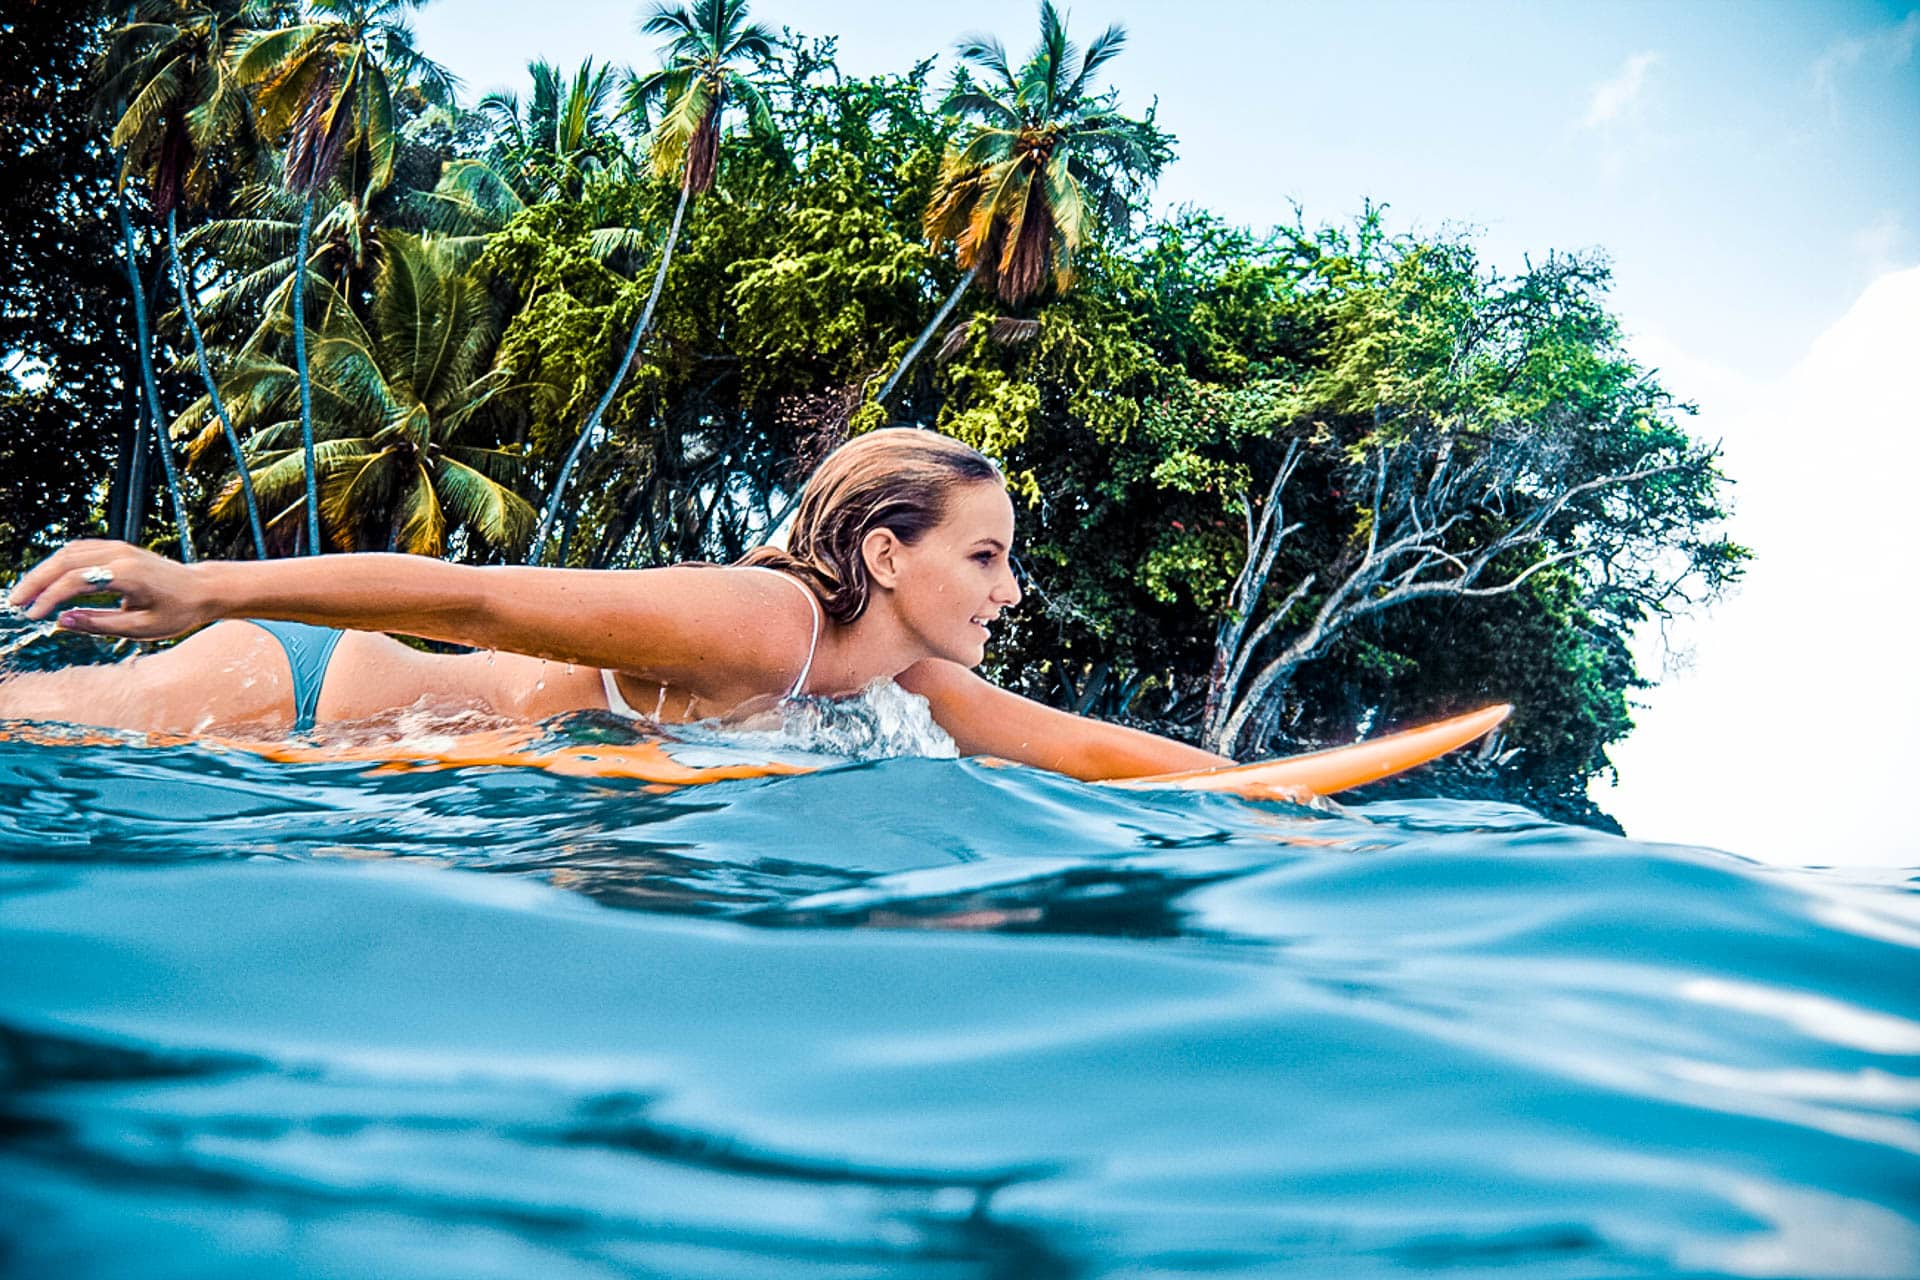 A person in bikini paddling on an orange surf board